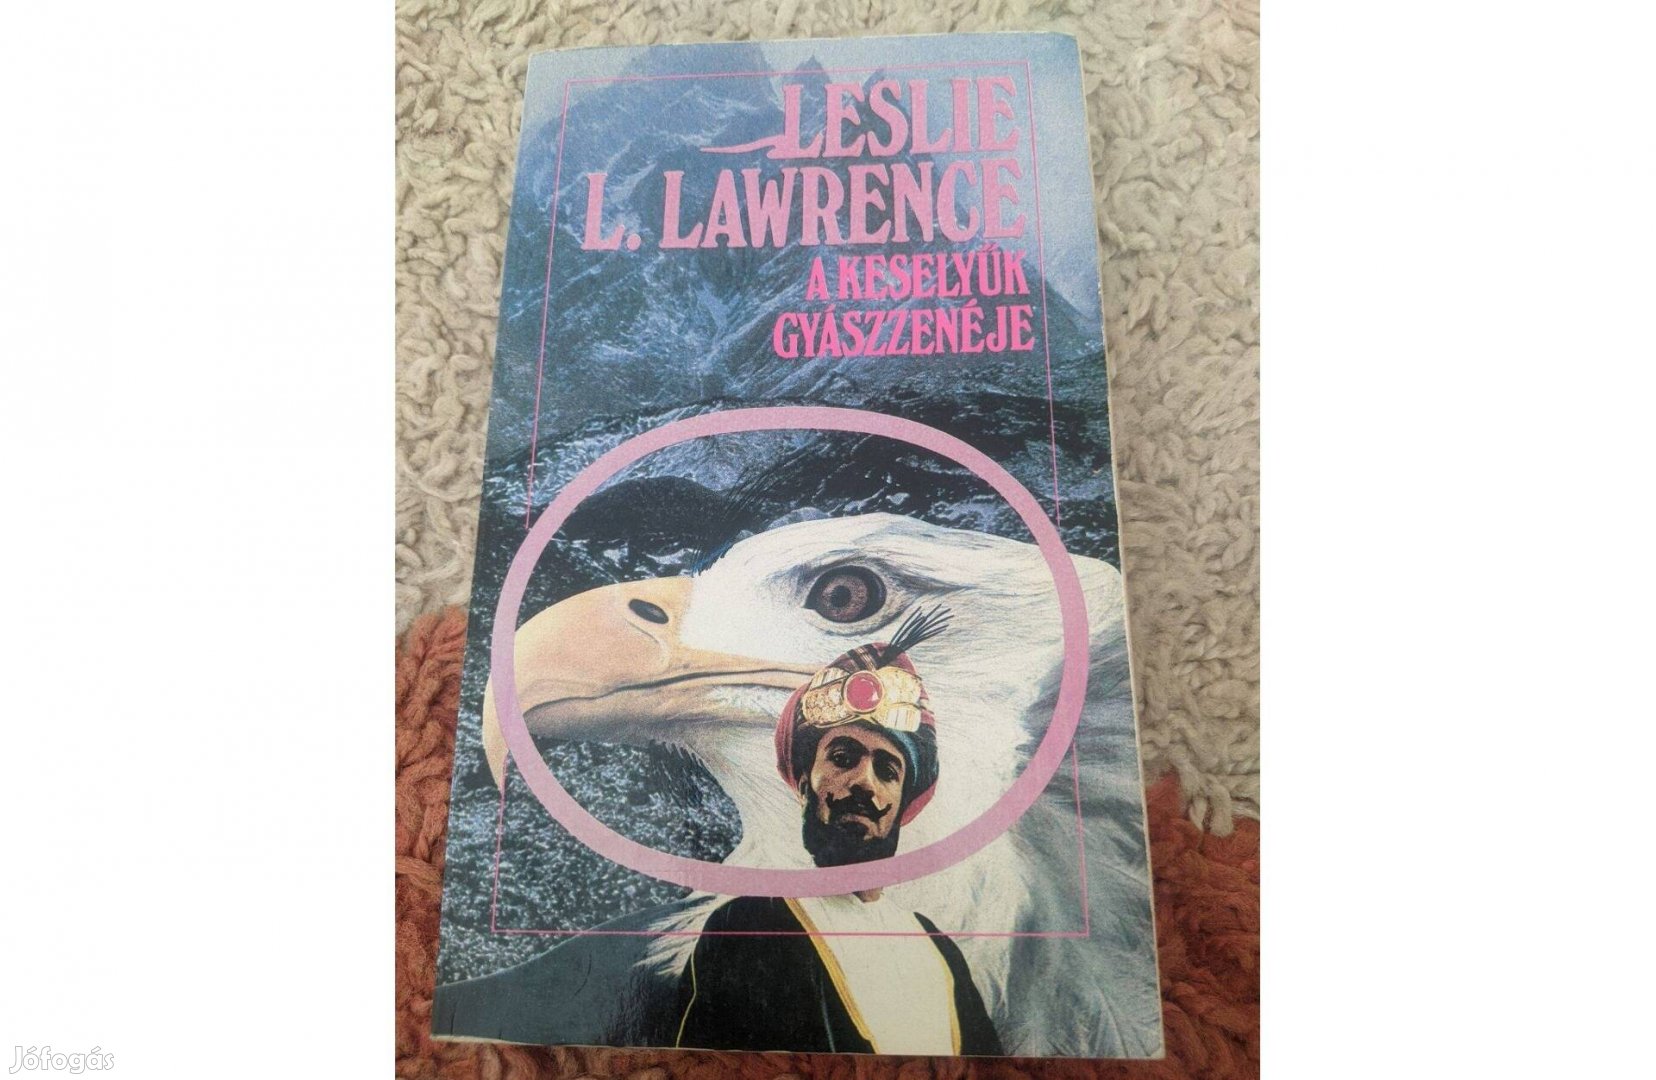 Leslie L Lawrence - A keselyűk gyászzenéje